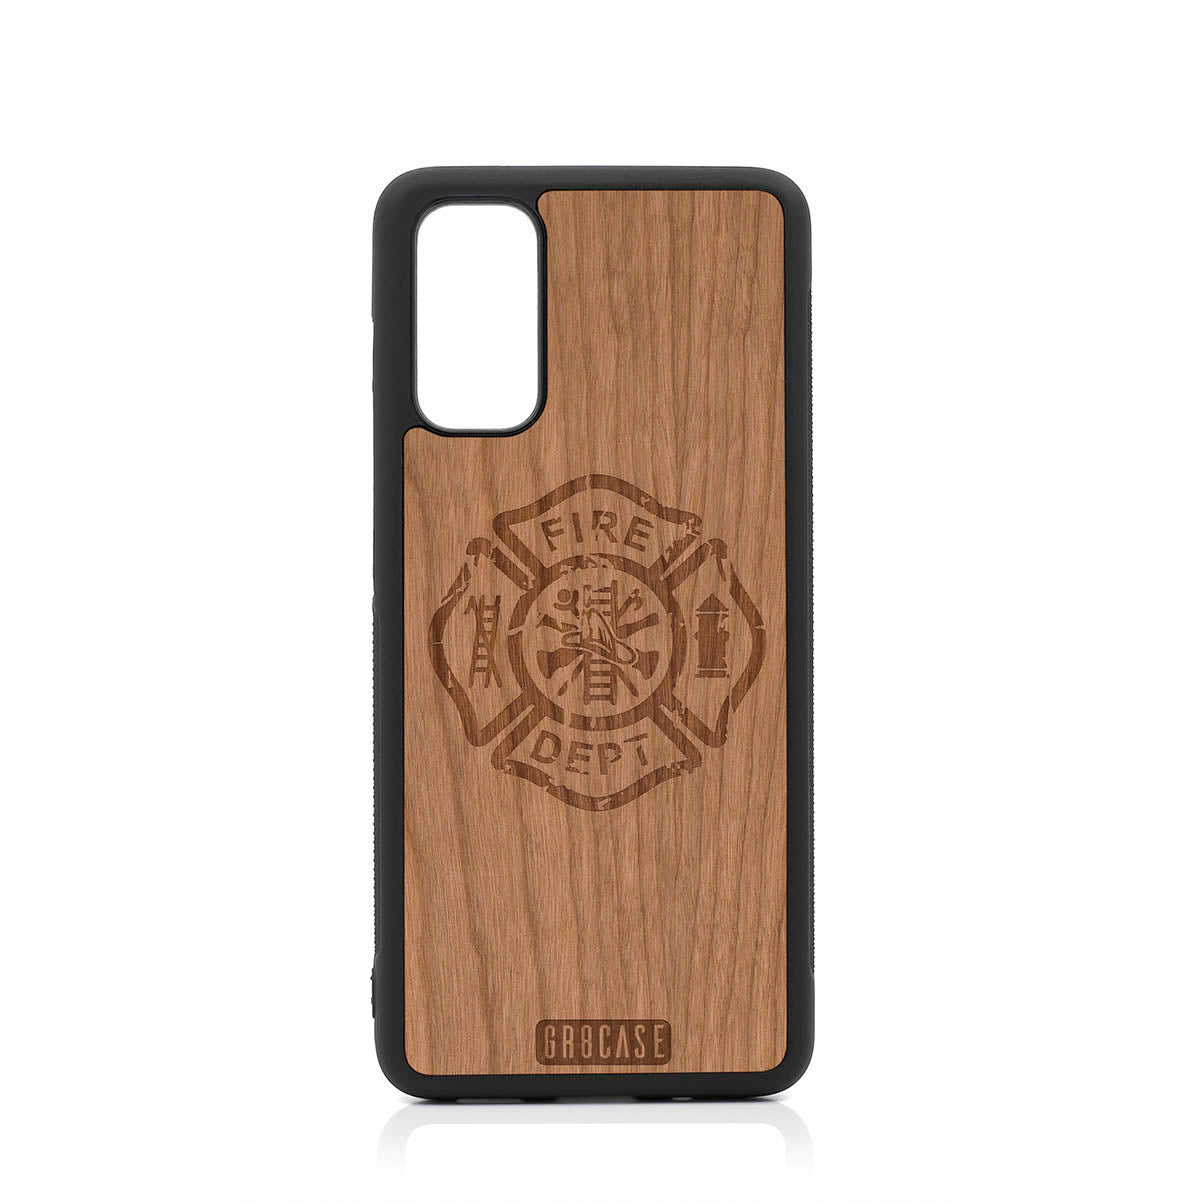 Fire Department Design Wood Case Samsung Galaxy S20 by GR8CASE